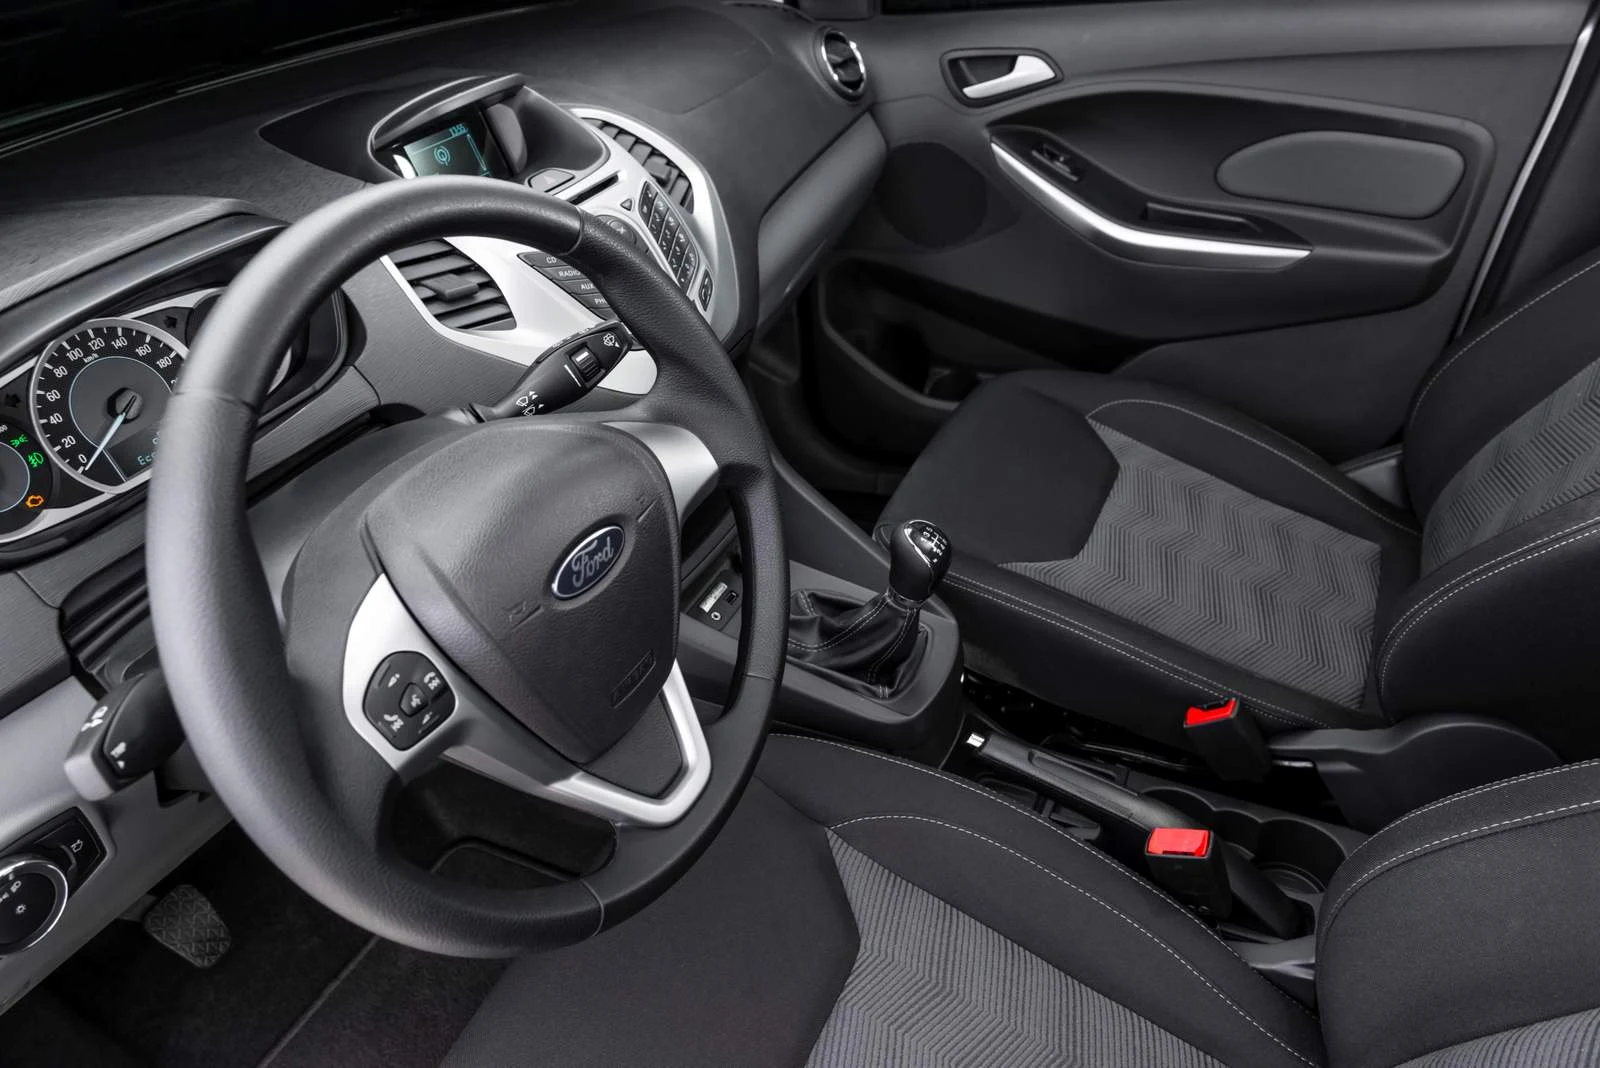 novo Ford Ka 2015 - interior